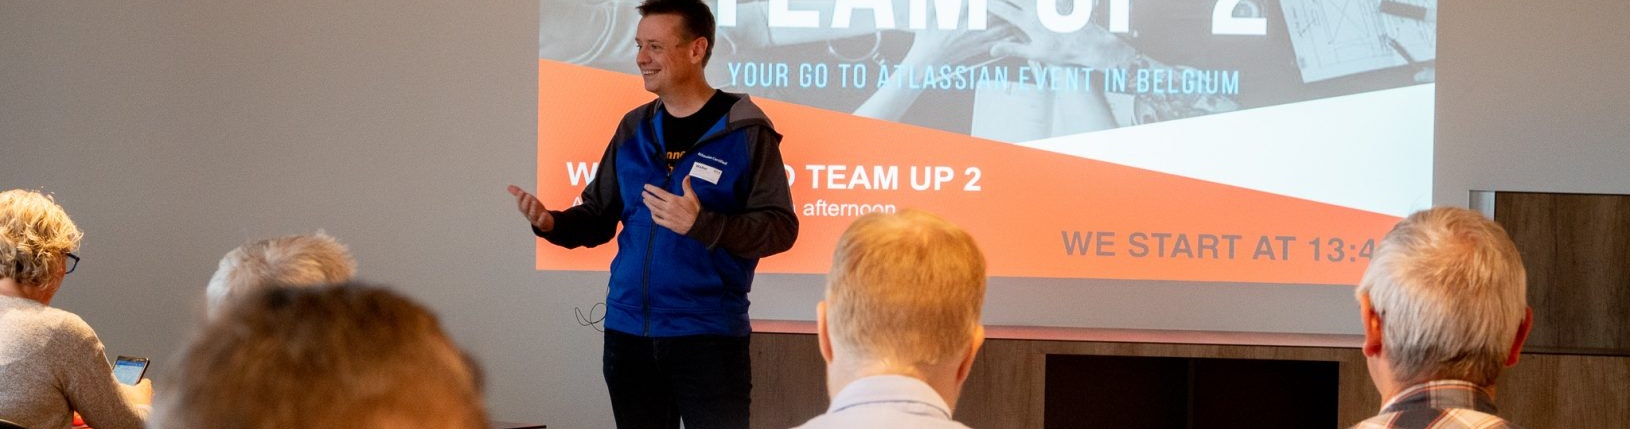 Team member talk about Atlassian team up event